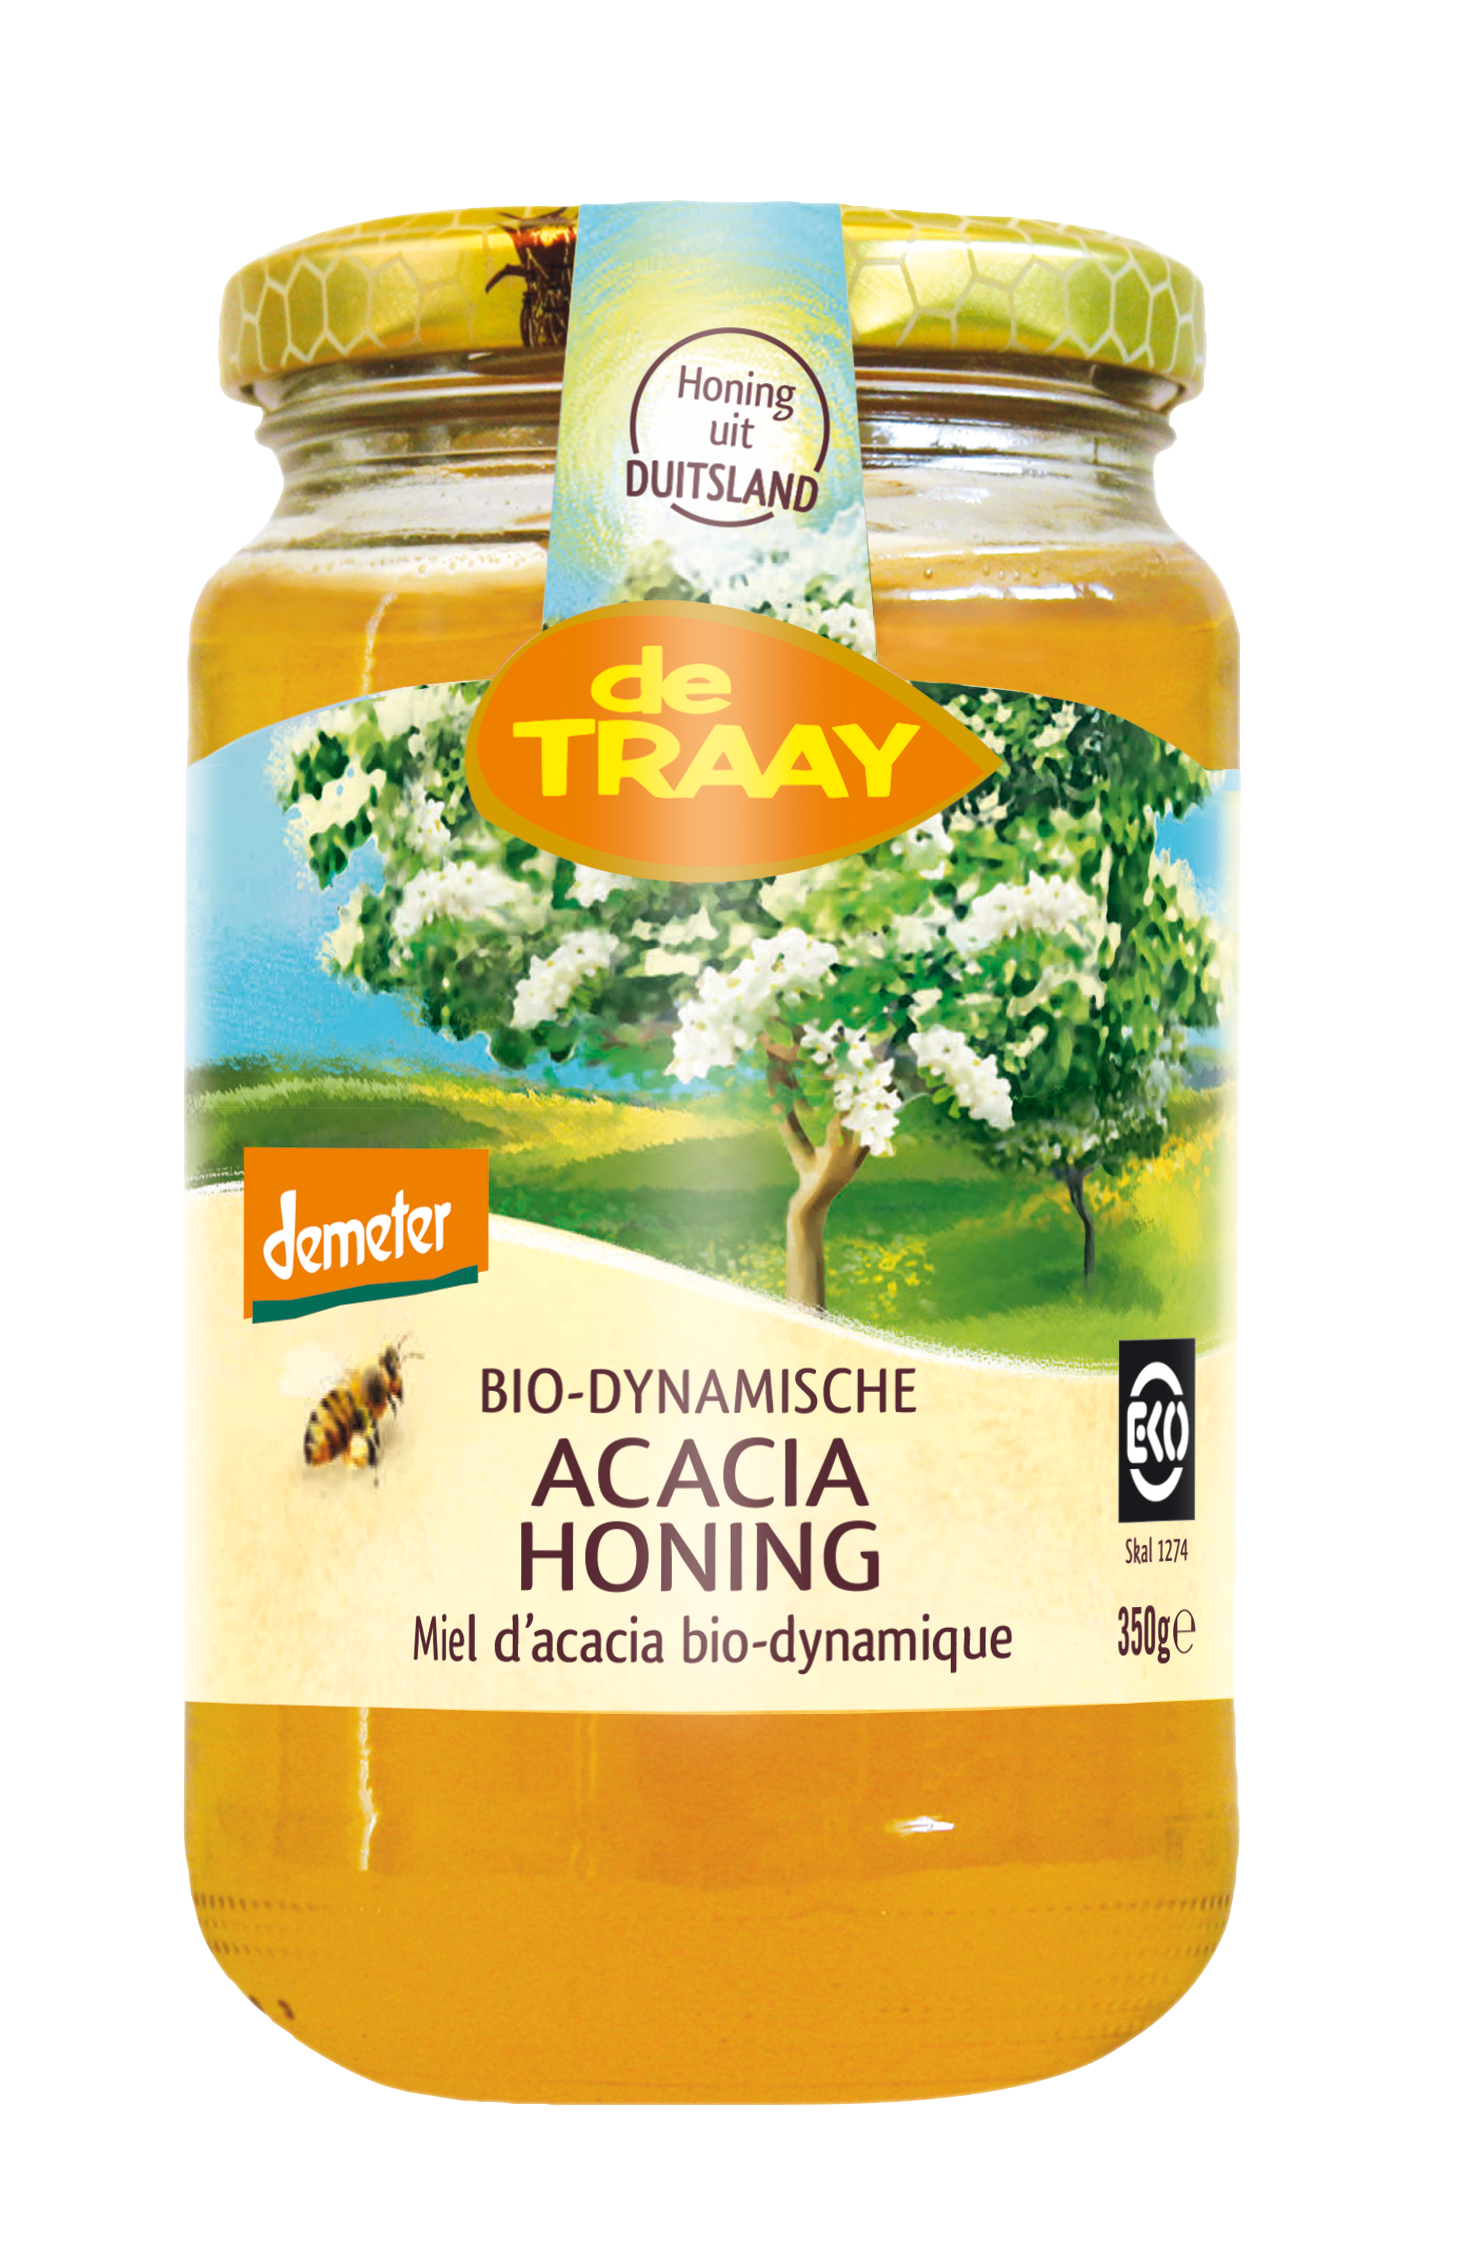 Demeter Acacia honing